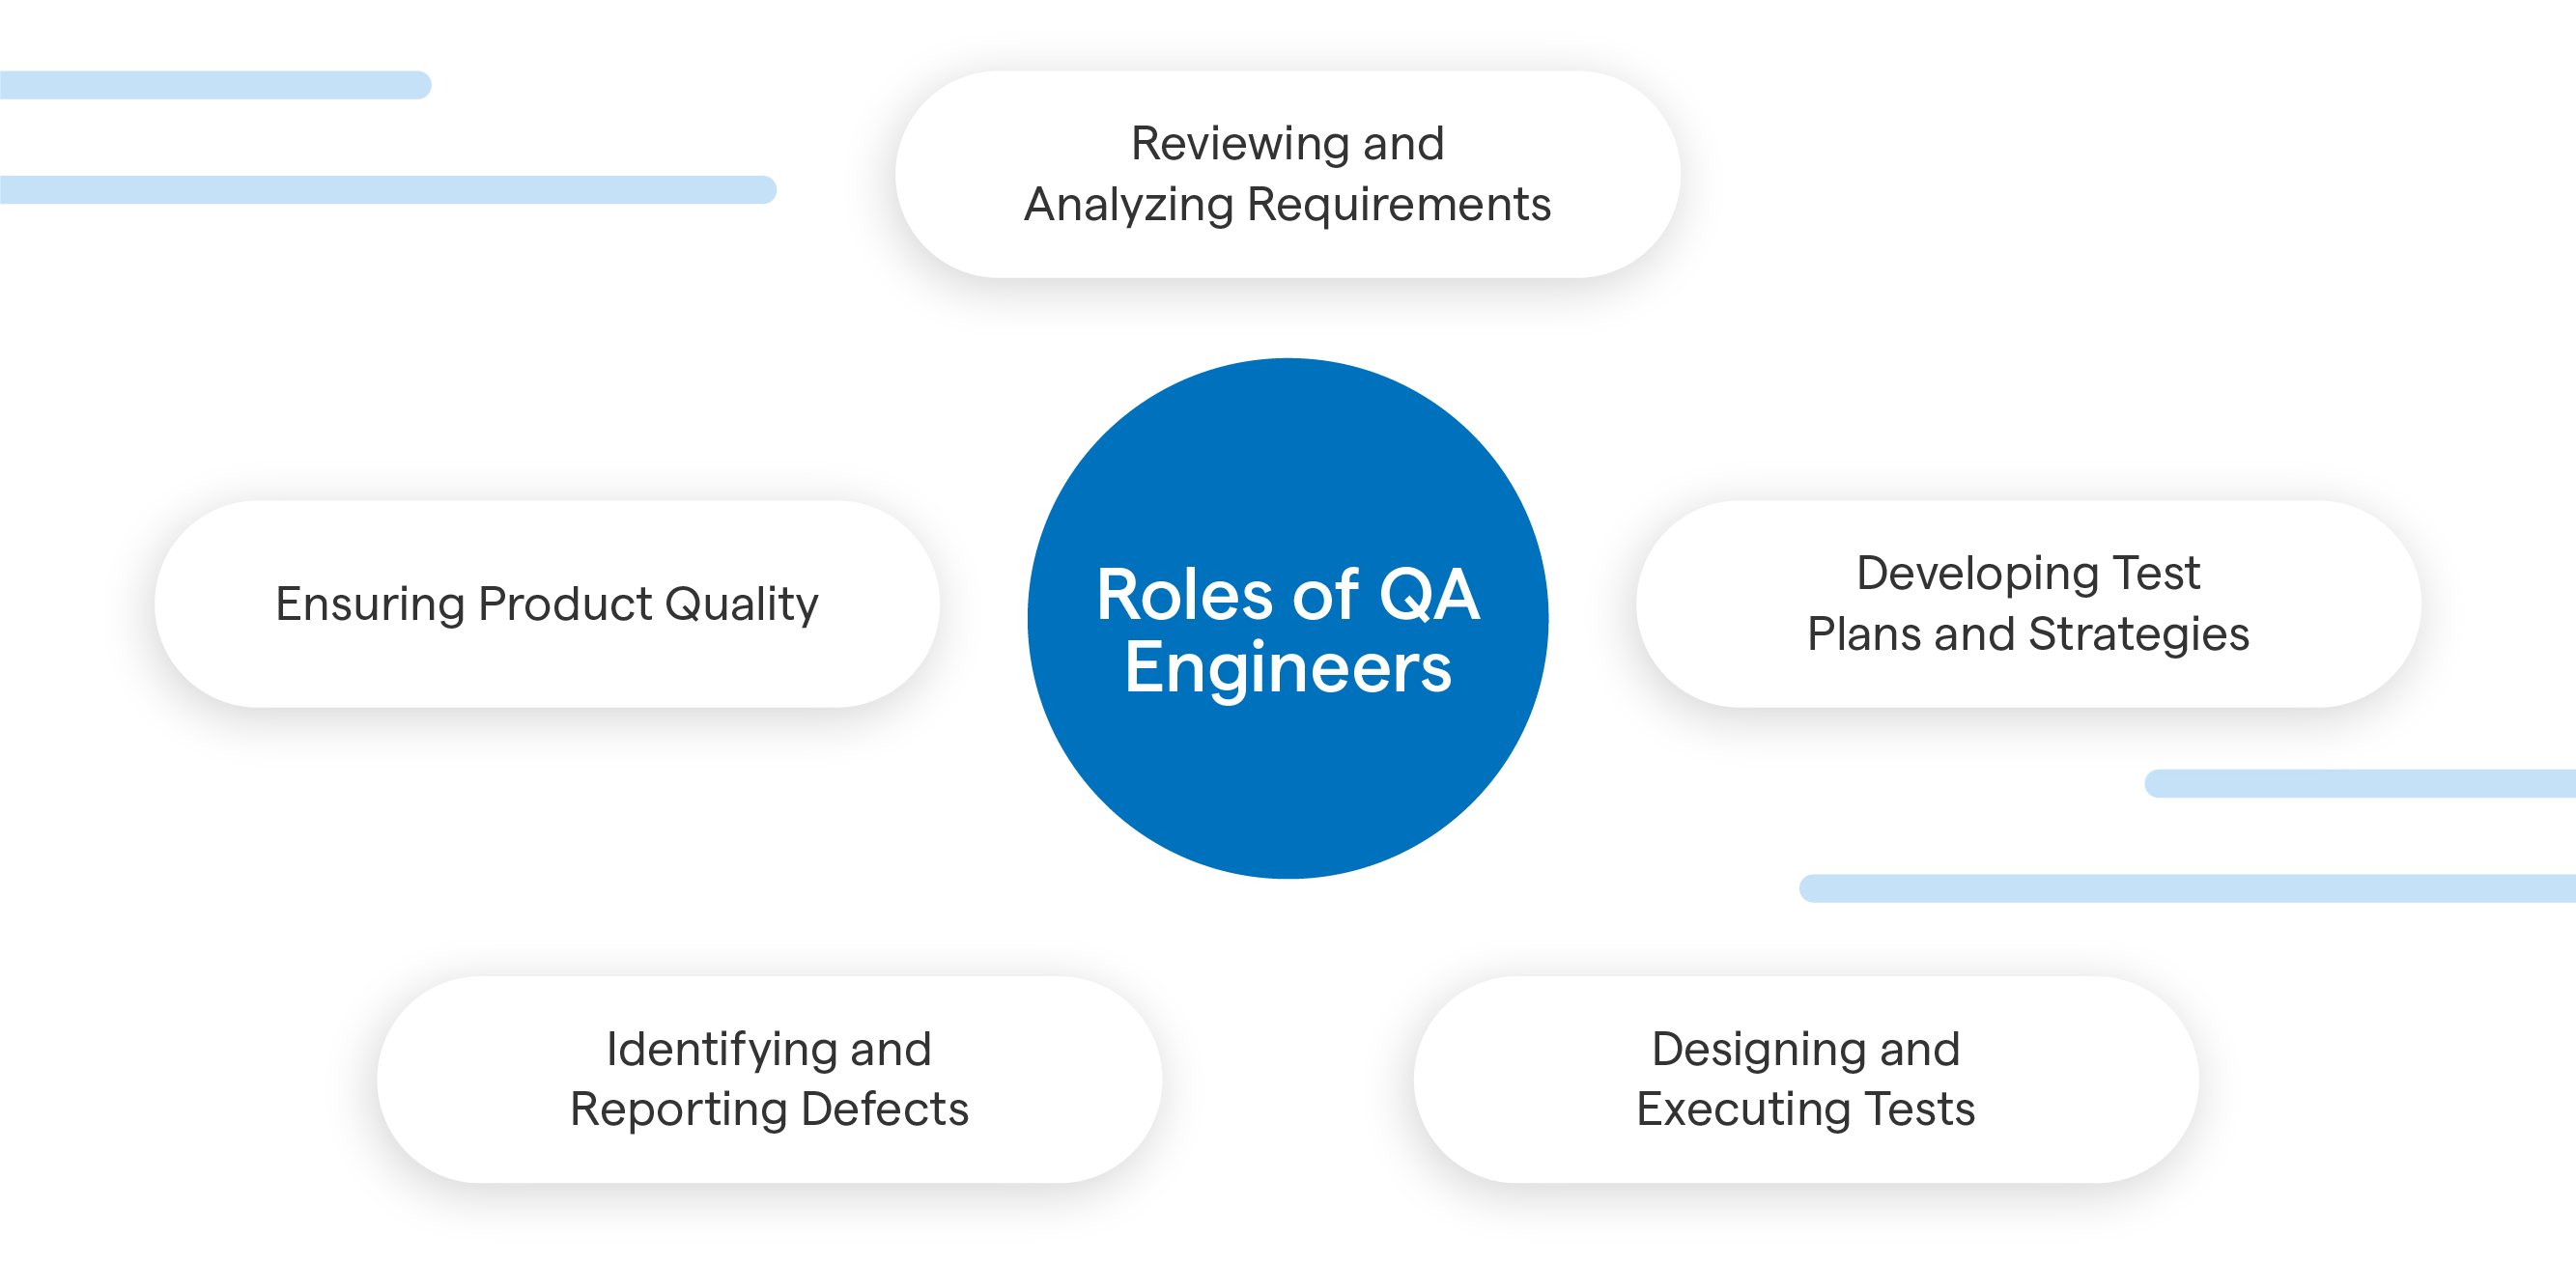 Roles of QA Engineers